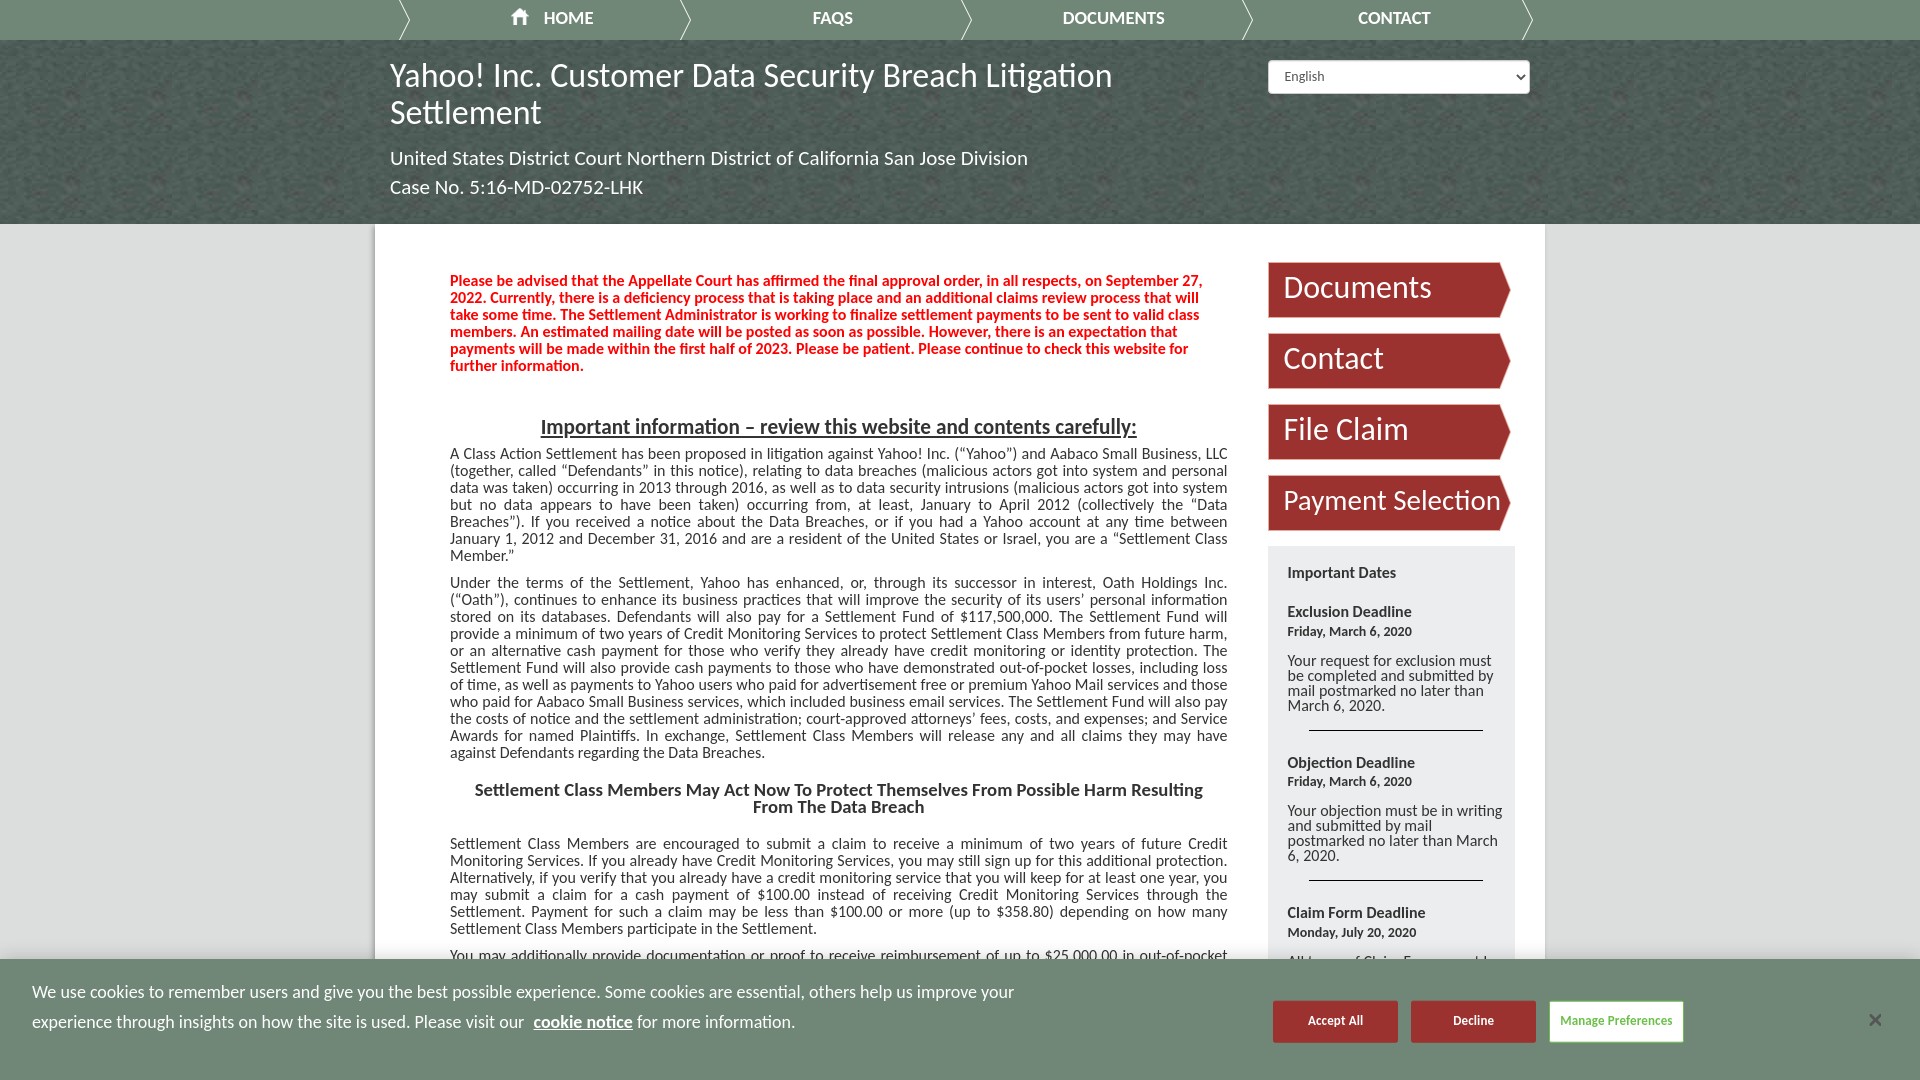 Yahoo Data Breach Settlement Website